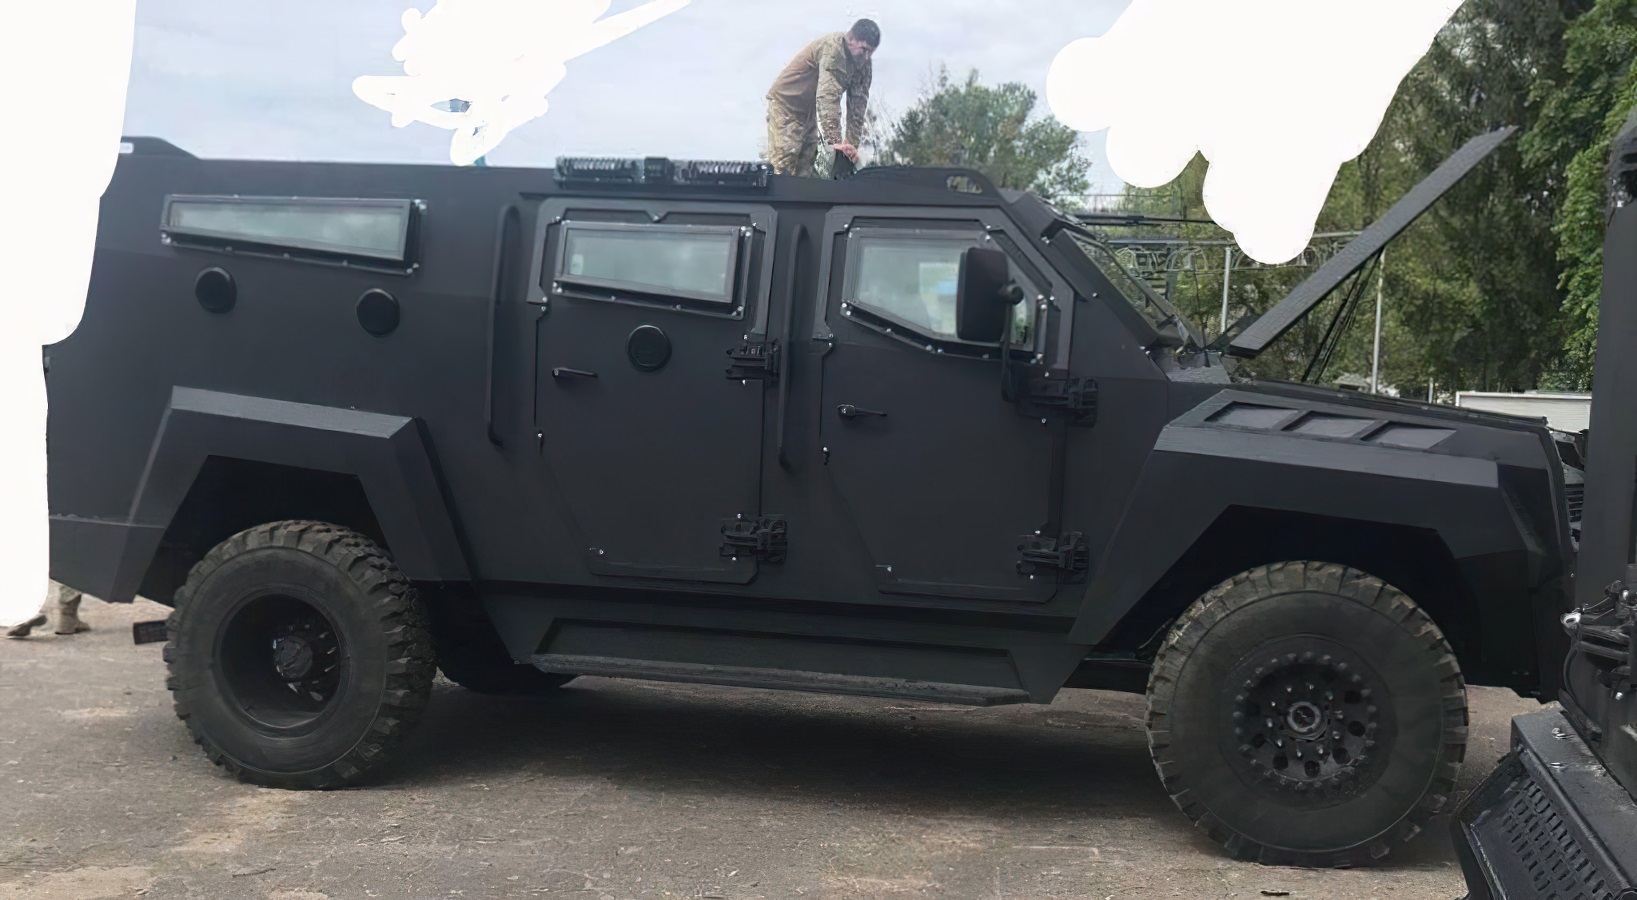 Ukraine received Senator APC armored vehicles - Militarnyi